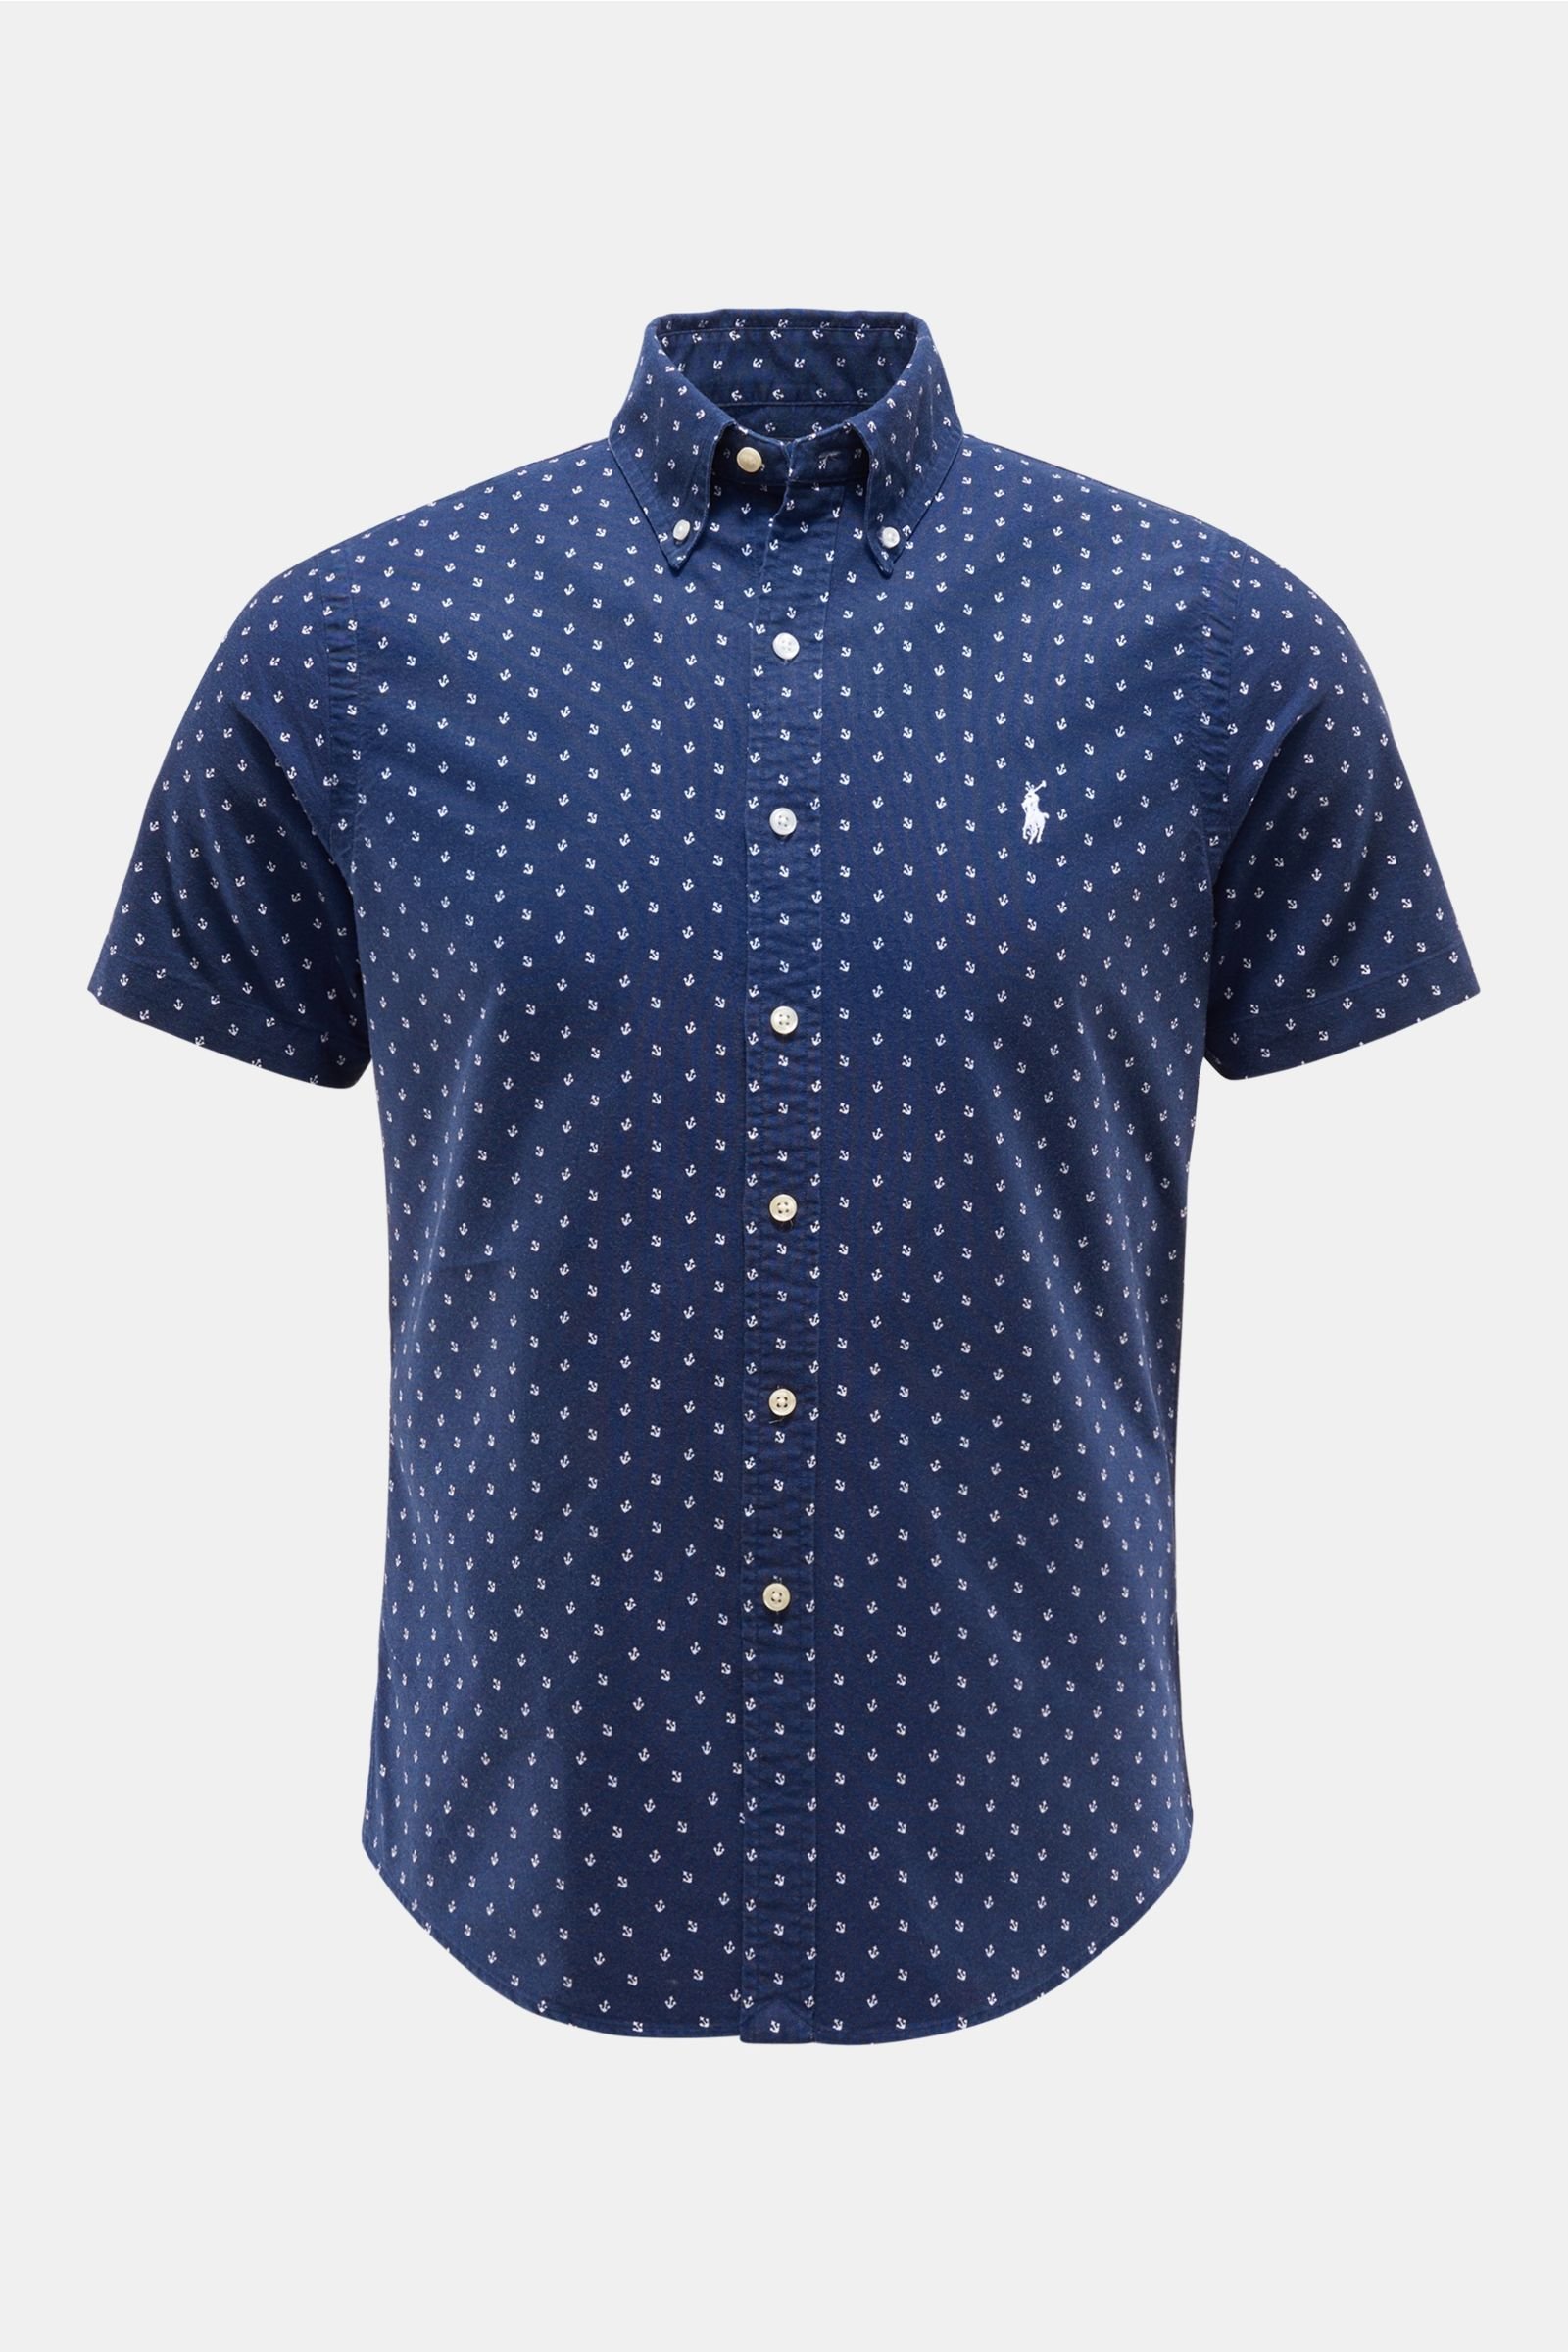 Short sleeve shirt button-down collar navy patterned